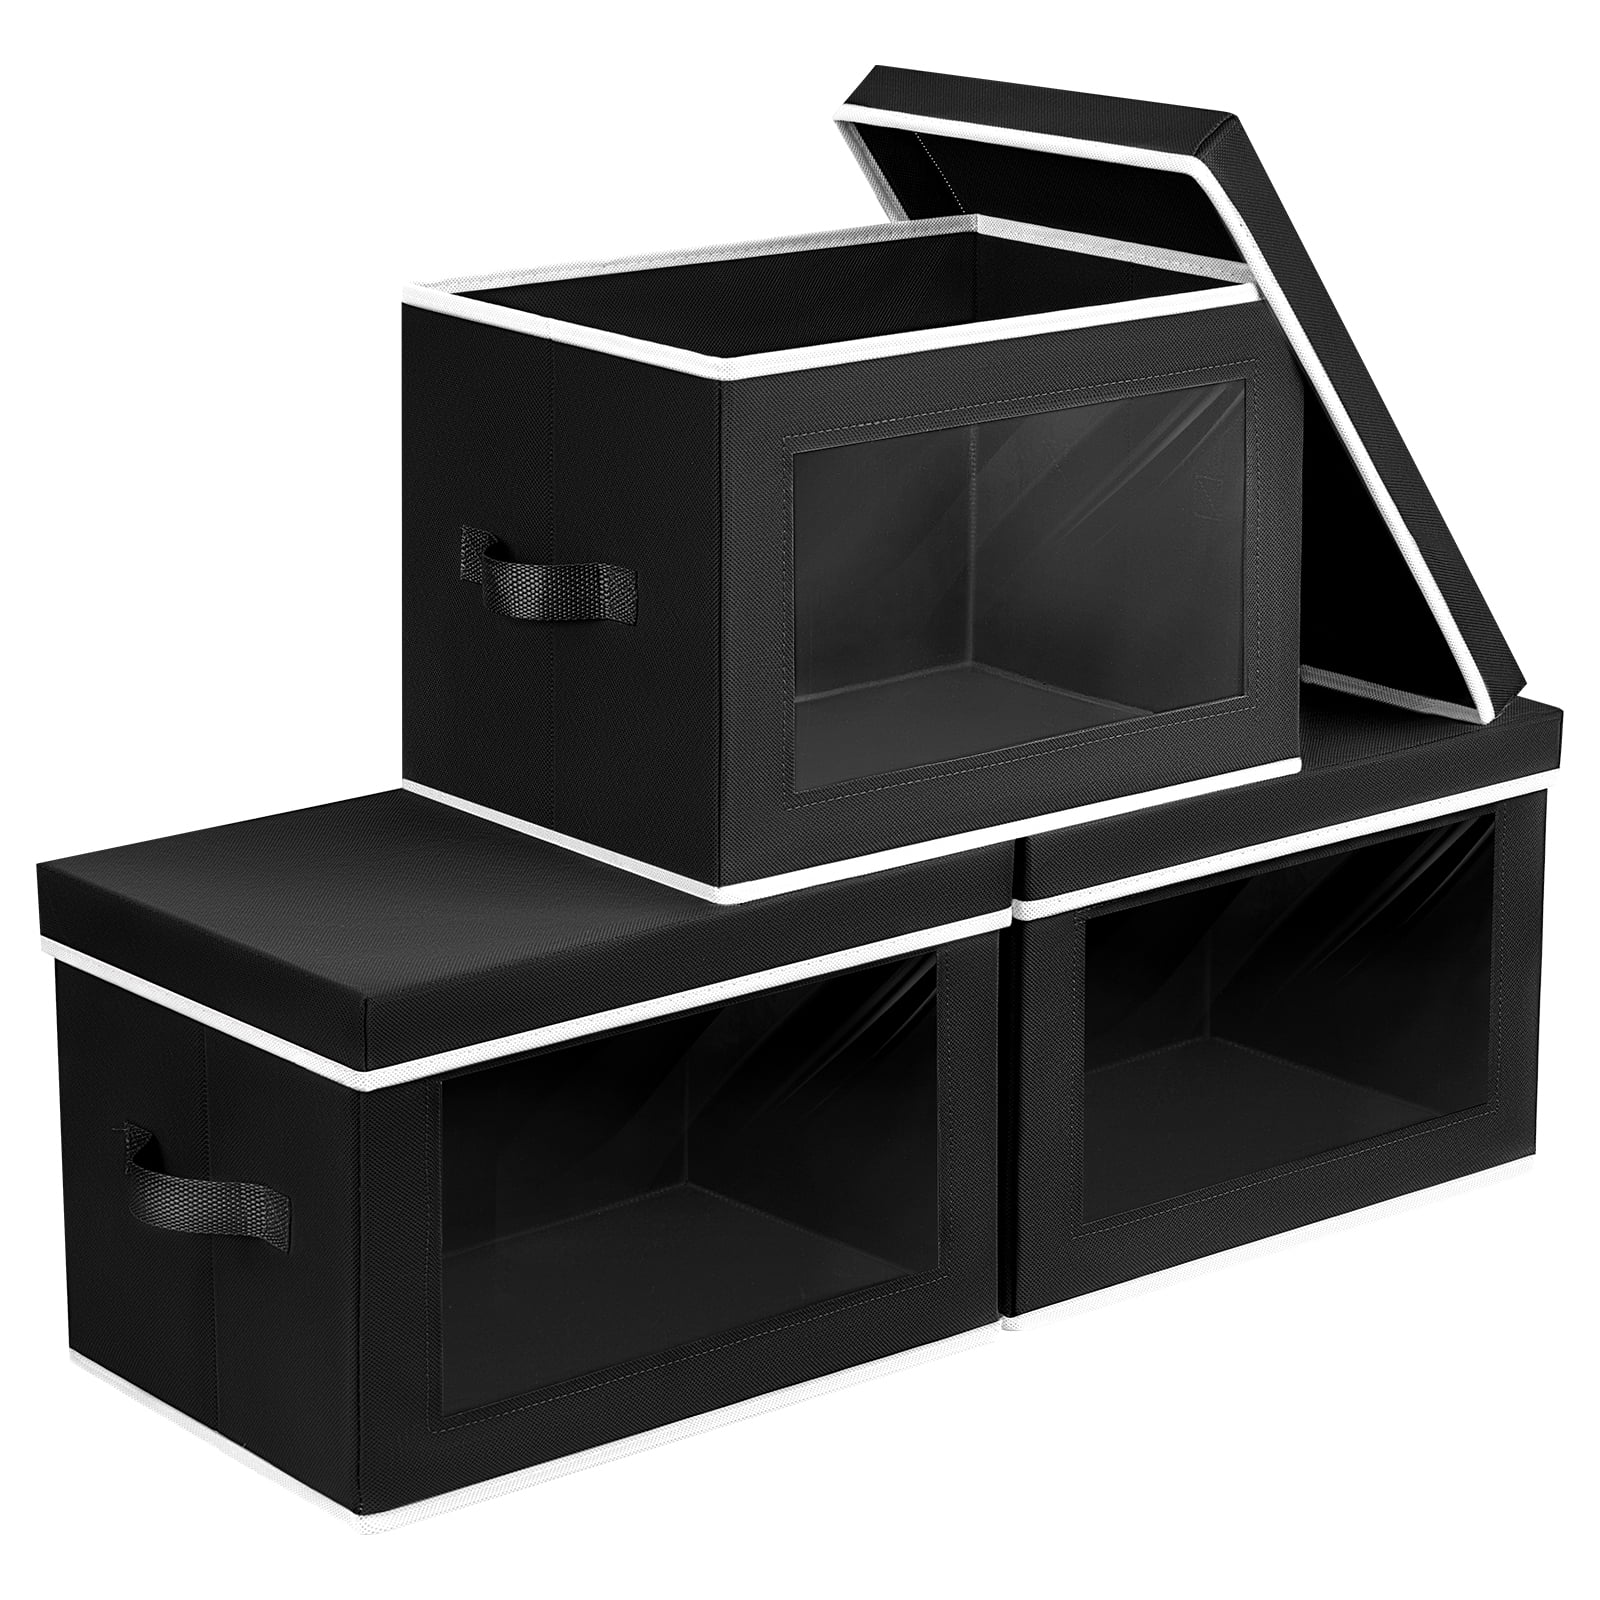 Home-Complete Set of 2 Storage Bins - Basket Set for Toy, Kitchen, Closet, and Bathroom Storage Organizers with Handles (Black)